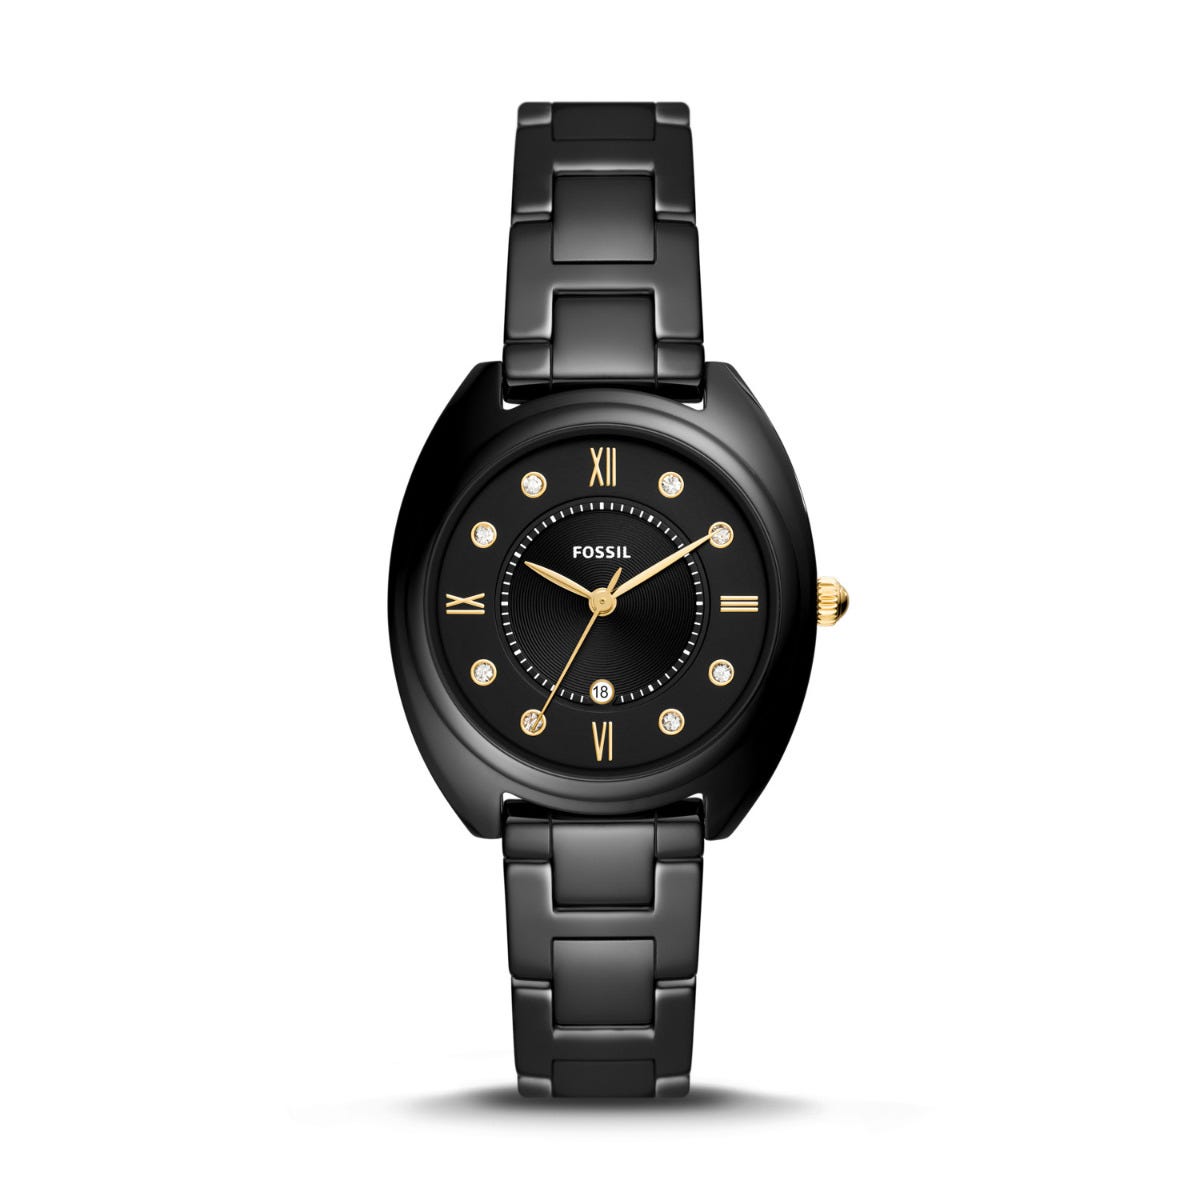 Gabby Three-Hand Date Black Stainless Steel and Ceramic Watch